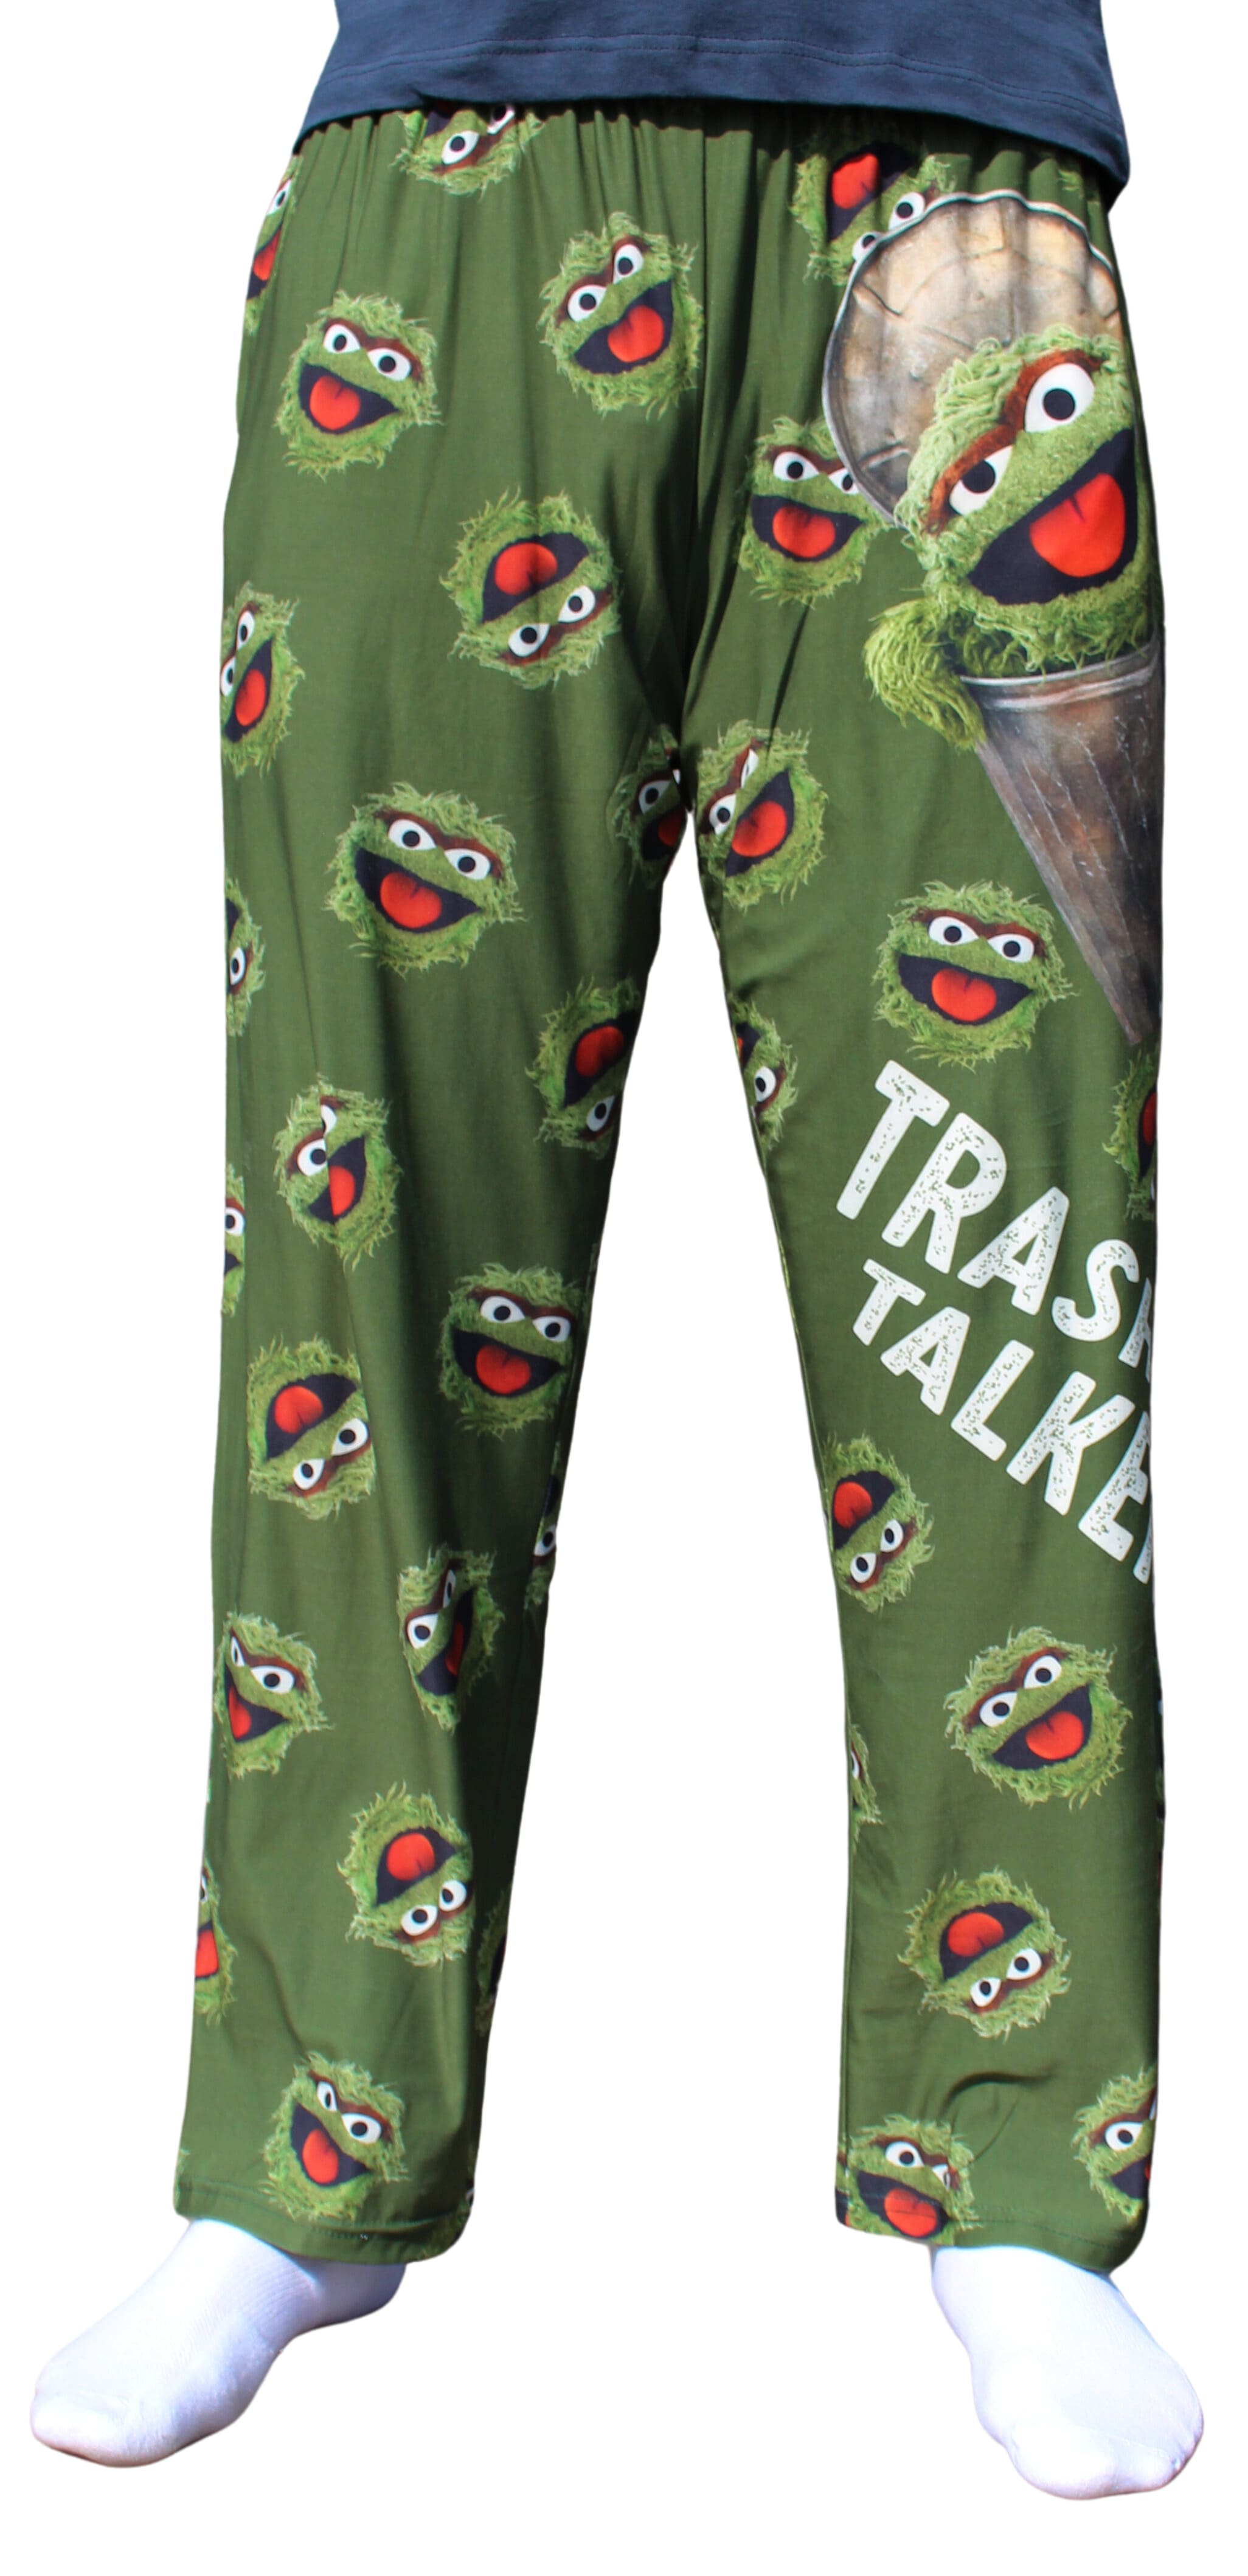 Trash Talker Pajama Lounge Pants on model front view (waist down)